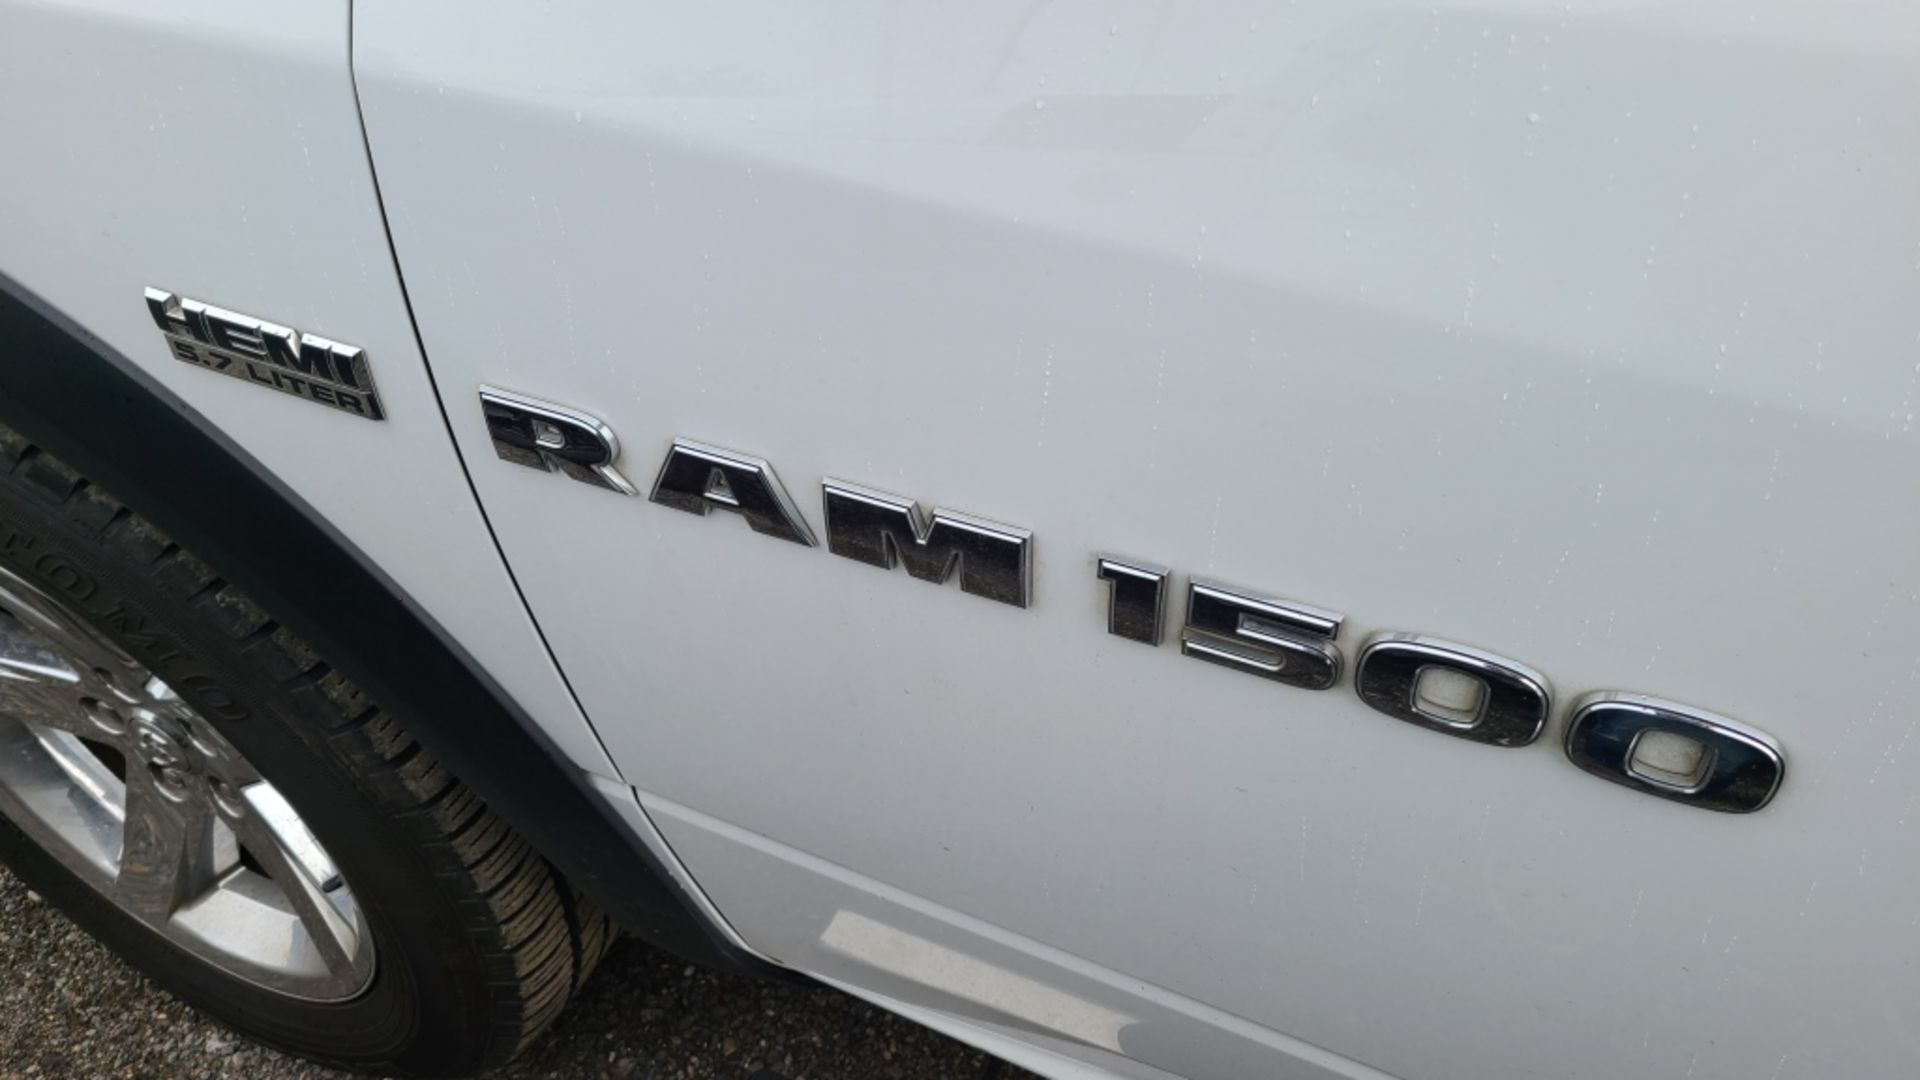 2012 Dodge Ram 1500 Pickup - Image 6 of 11